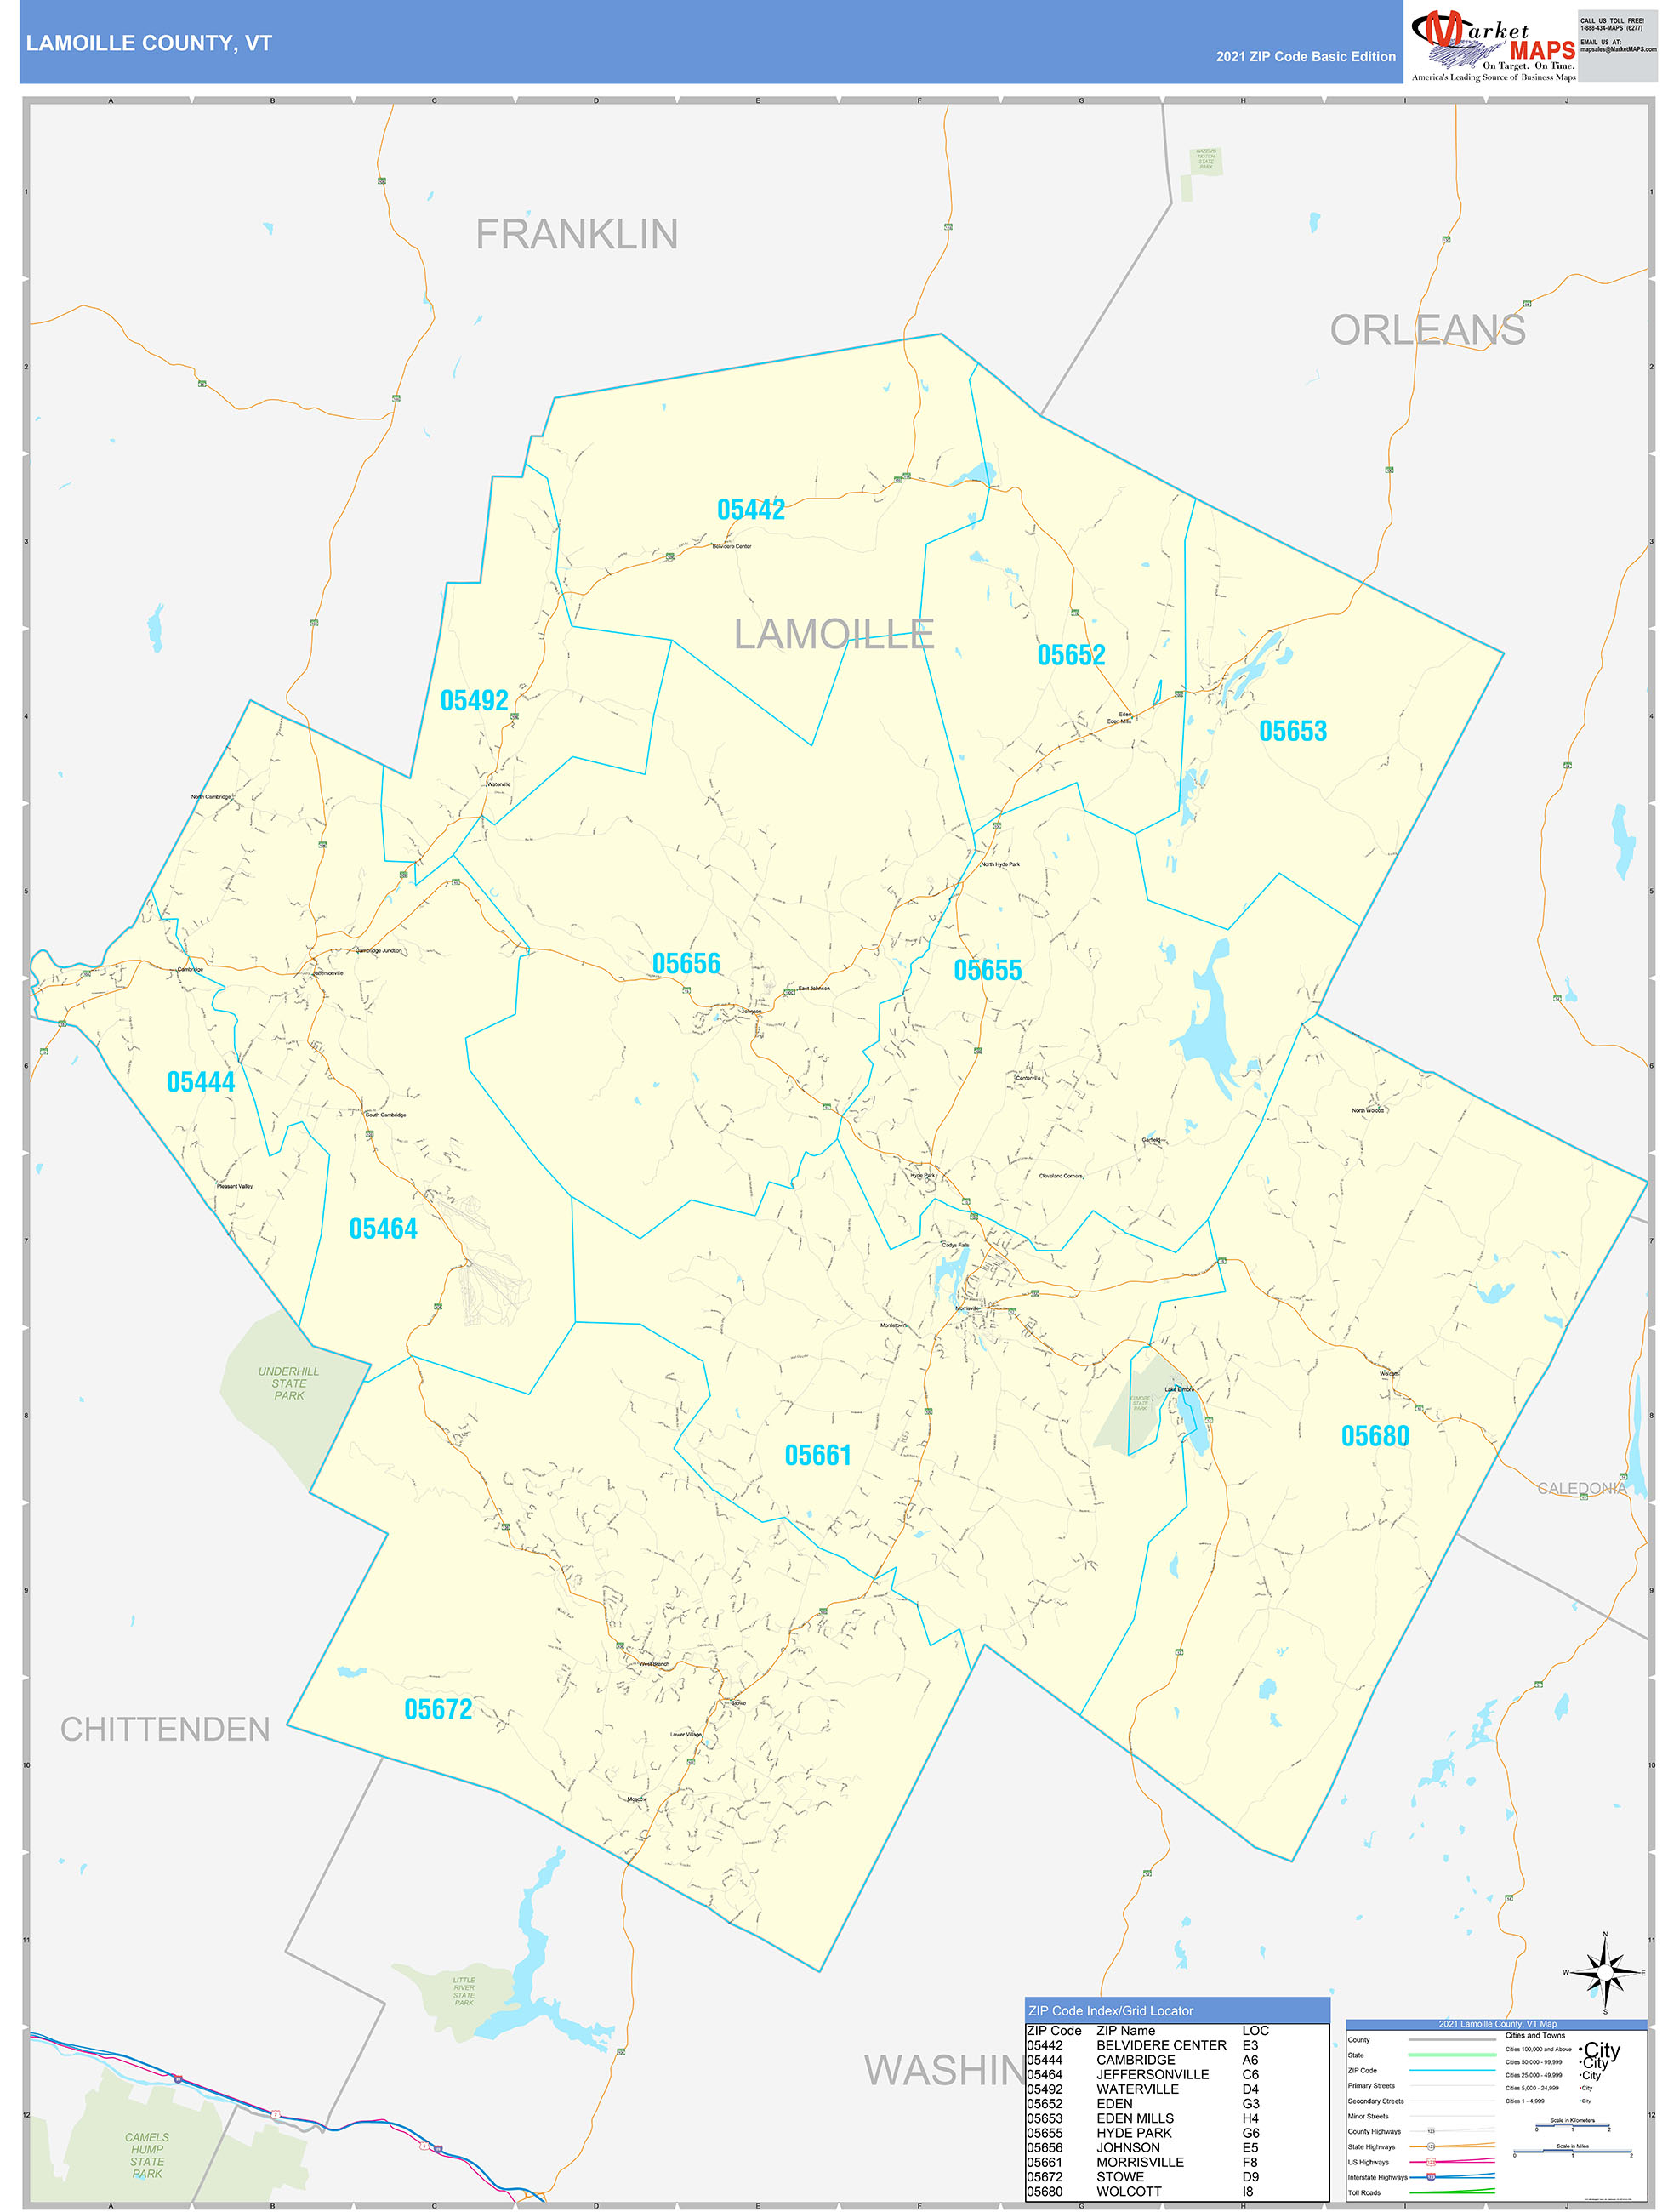 Lamoille County, VT Zip Code Wall Map Basic Style by MarketMAPS MapSales